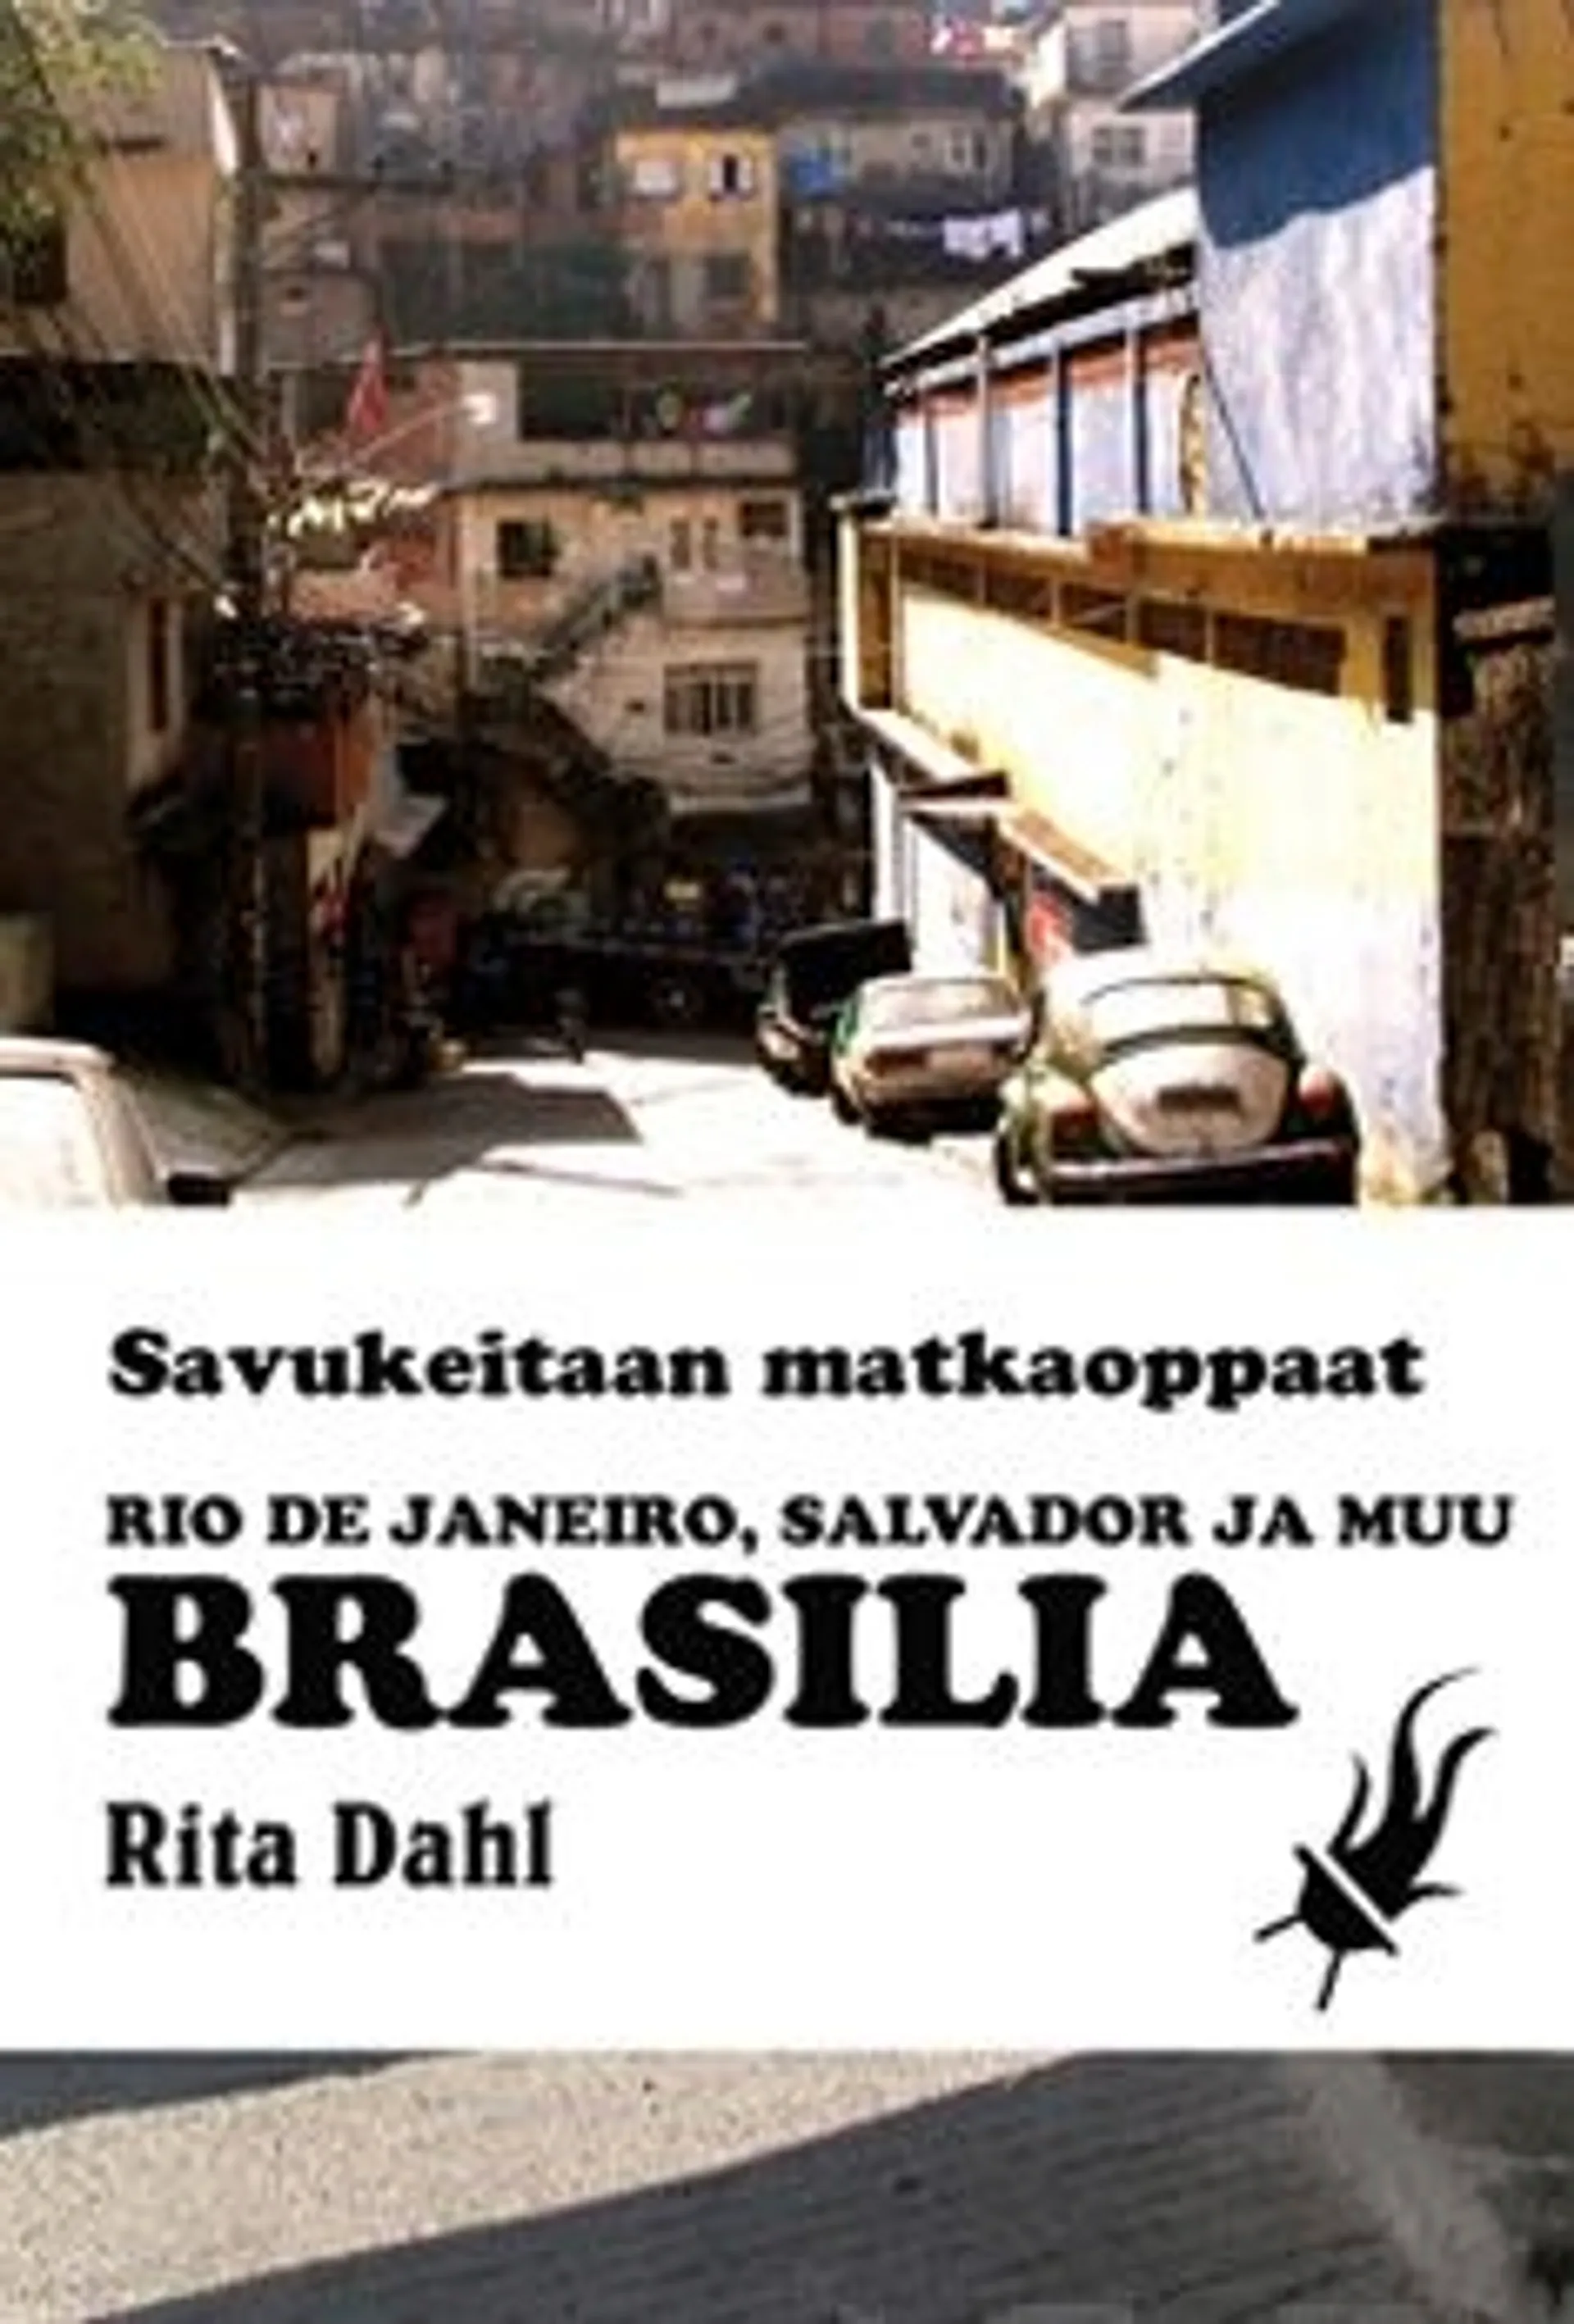 Dahl, Rio de Janeiro, Salvador ja muu Brasilia